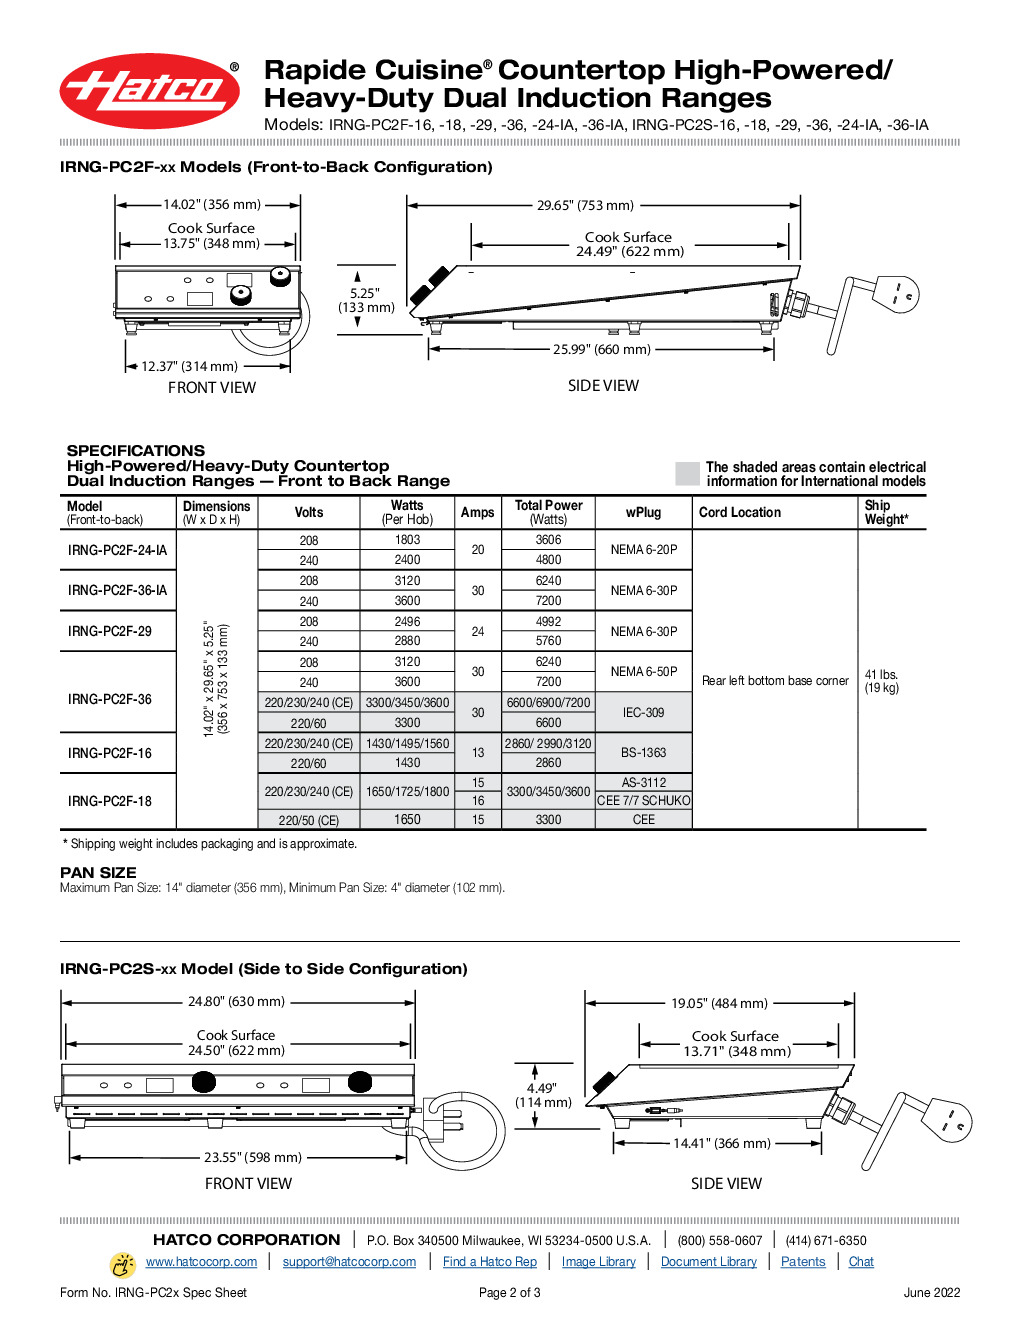 Hatco IRNG-PC2F-36-QS Countertop Induction Range